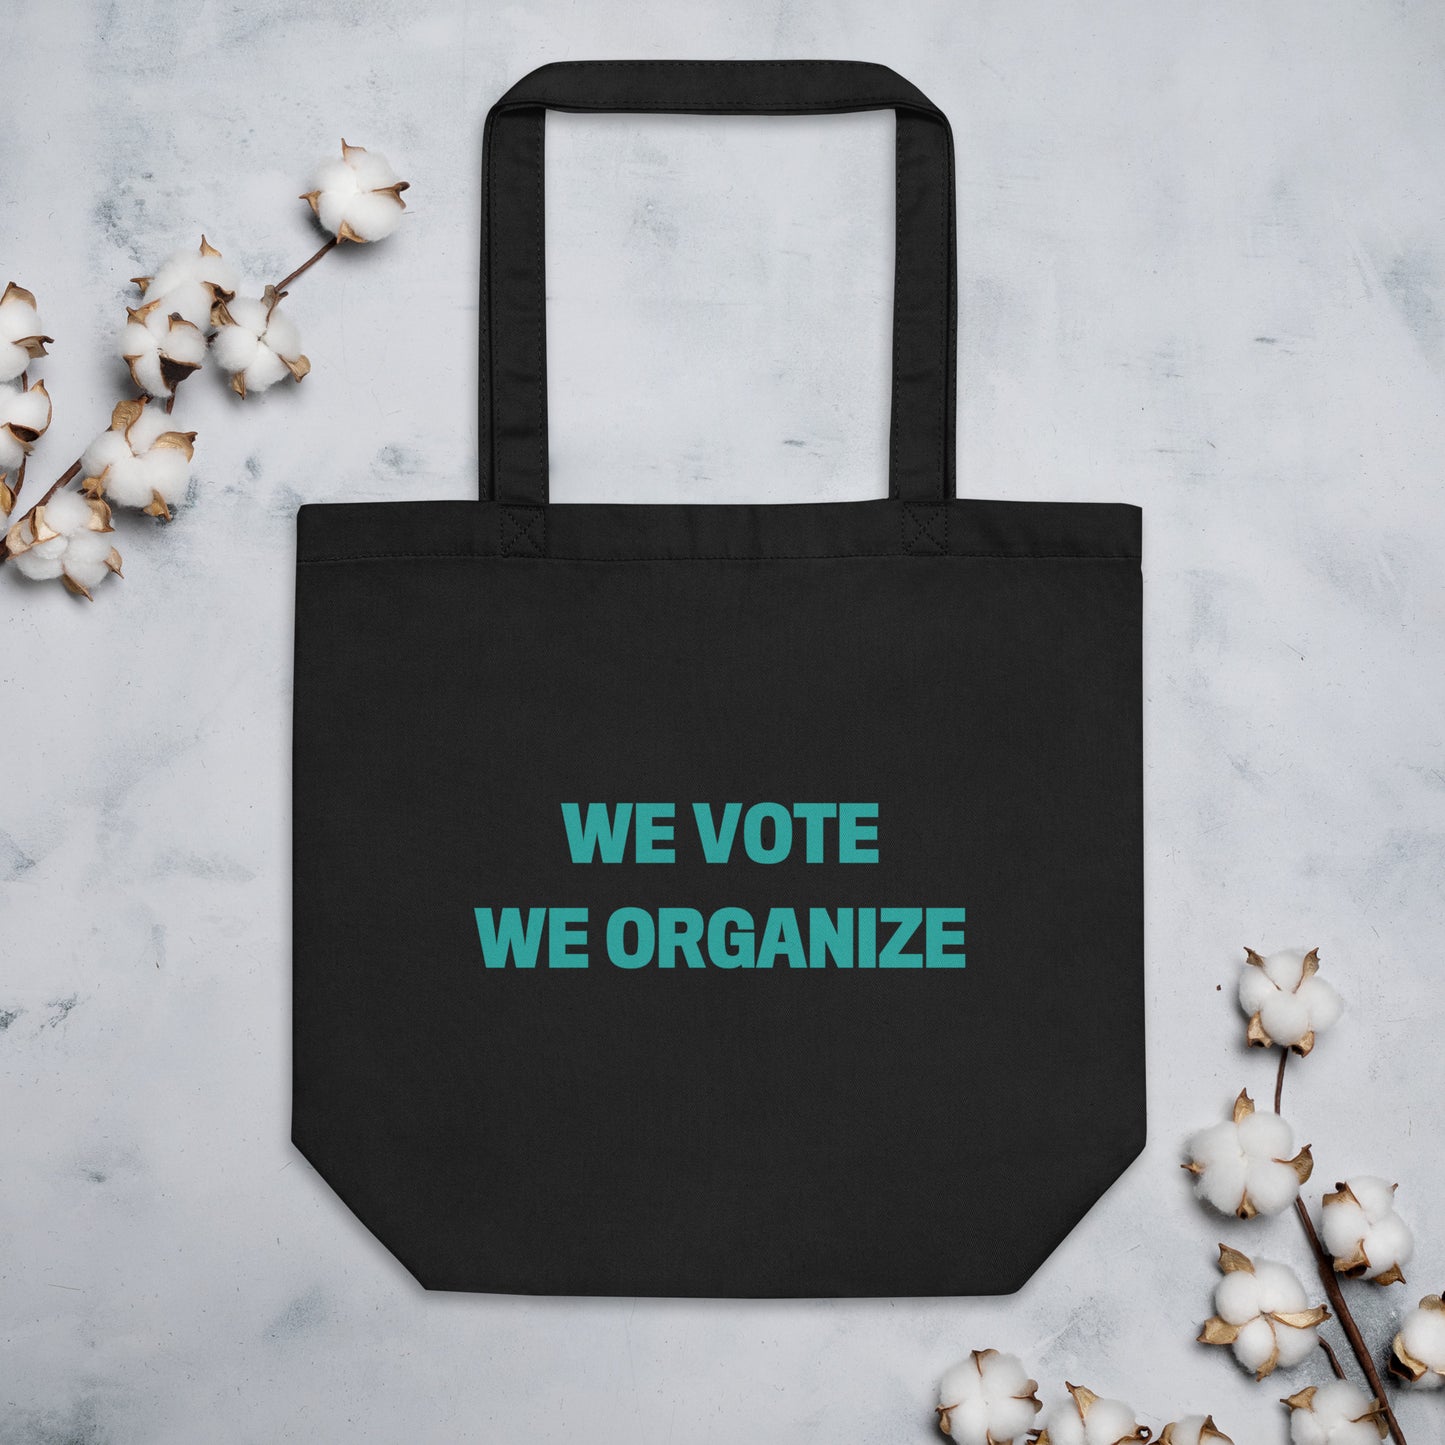 We Vote, We Organize Tote bag!